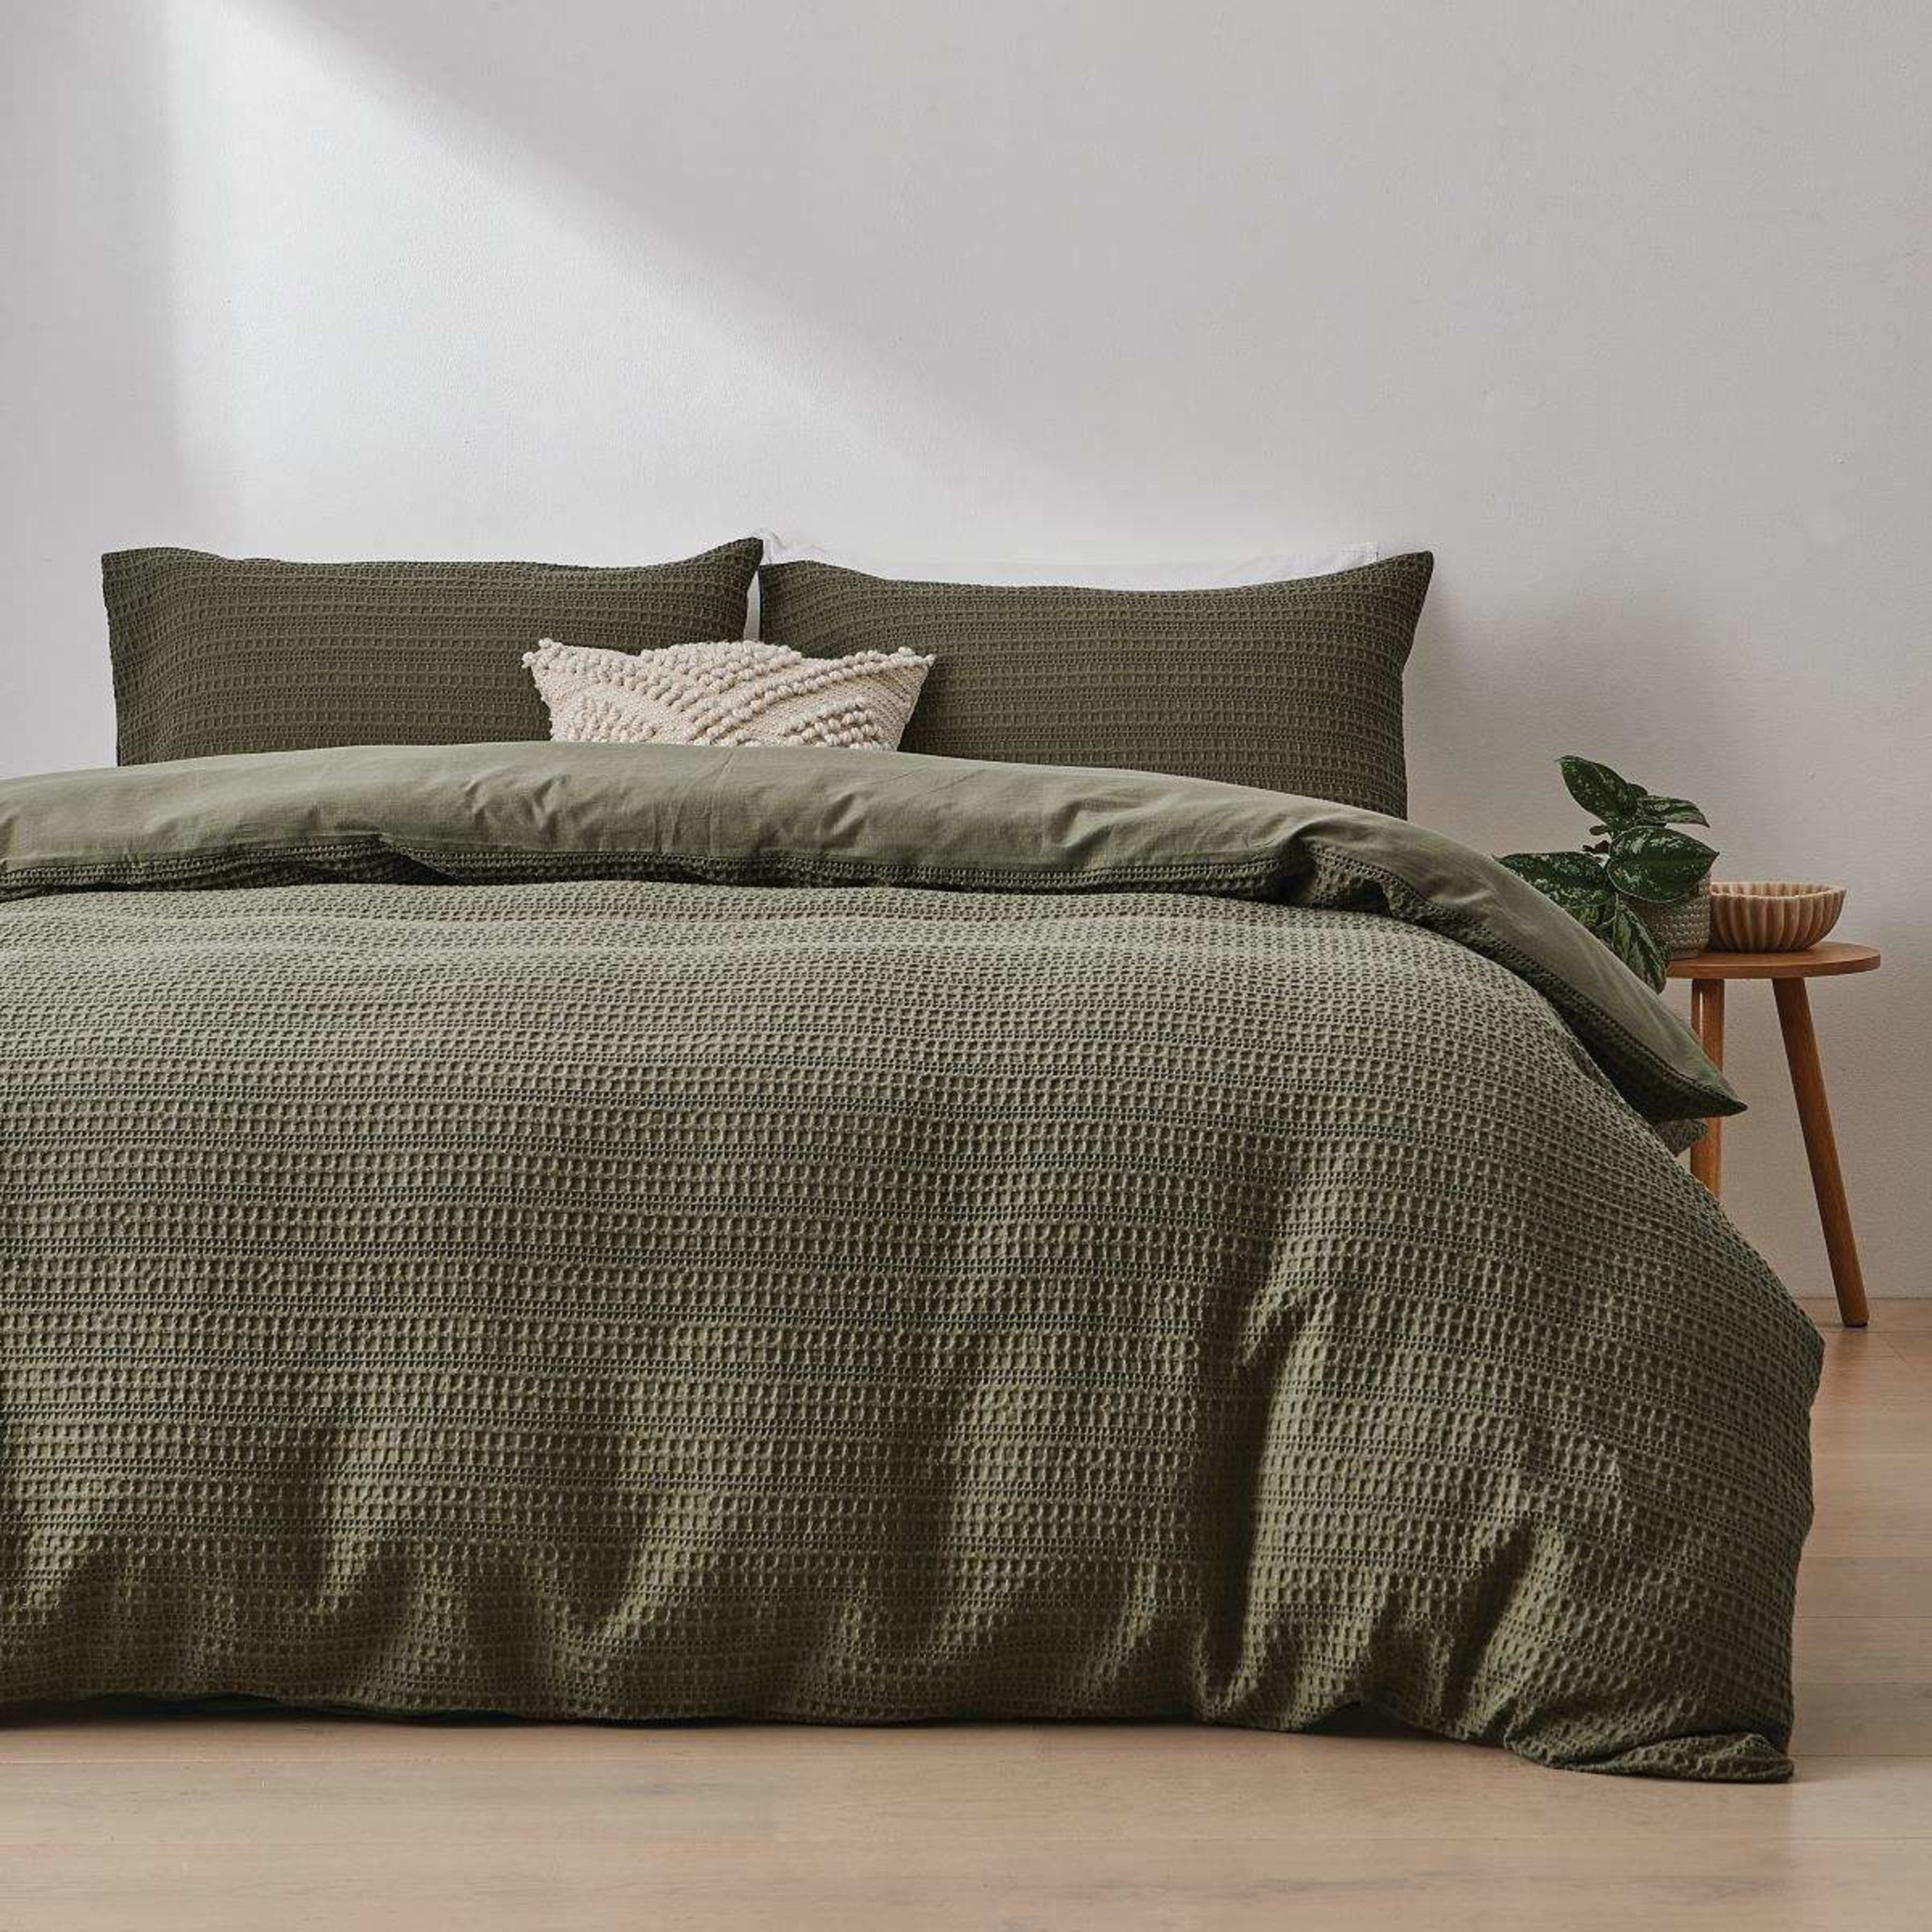 Makena Cotton Quilt Cover Set - King Bed, Forest